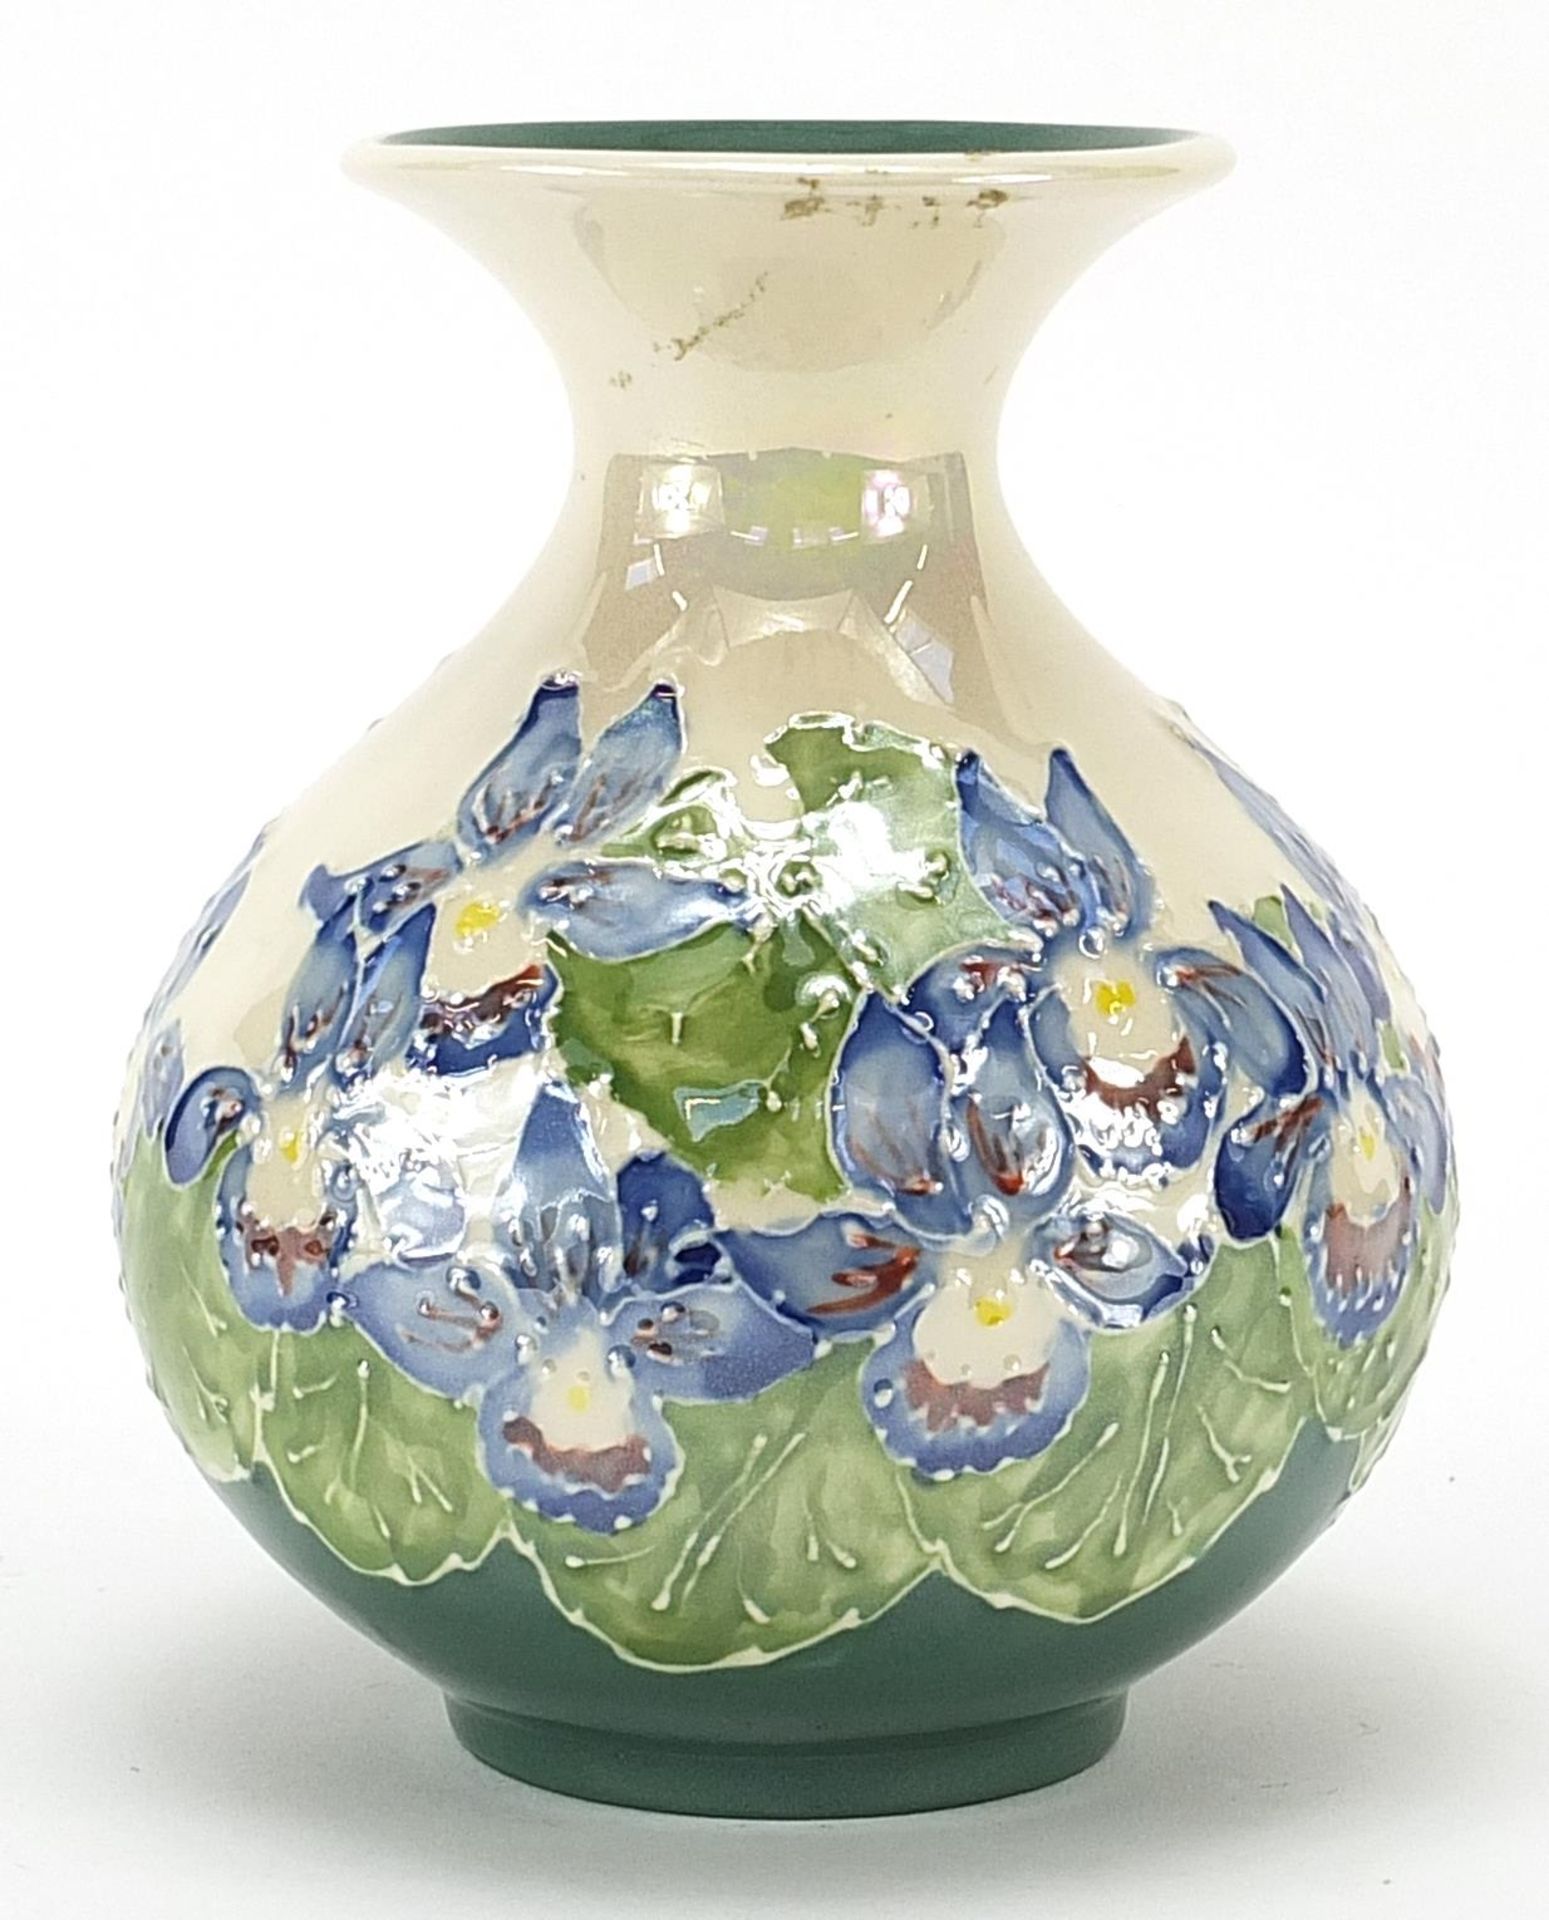 Chelsea Works Burslem Moorland vase hand painted with flowers, 232/750, 15cm high